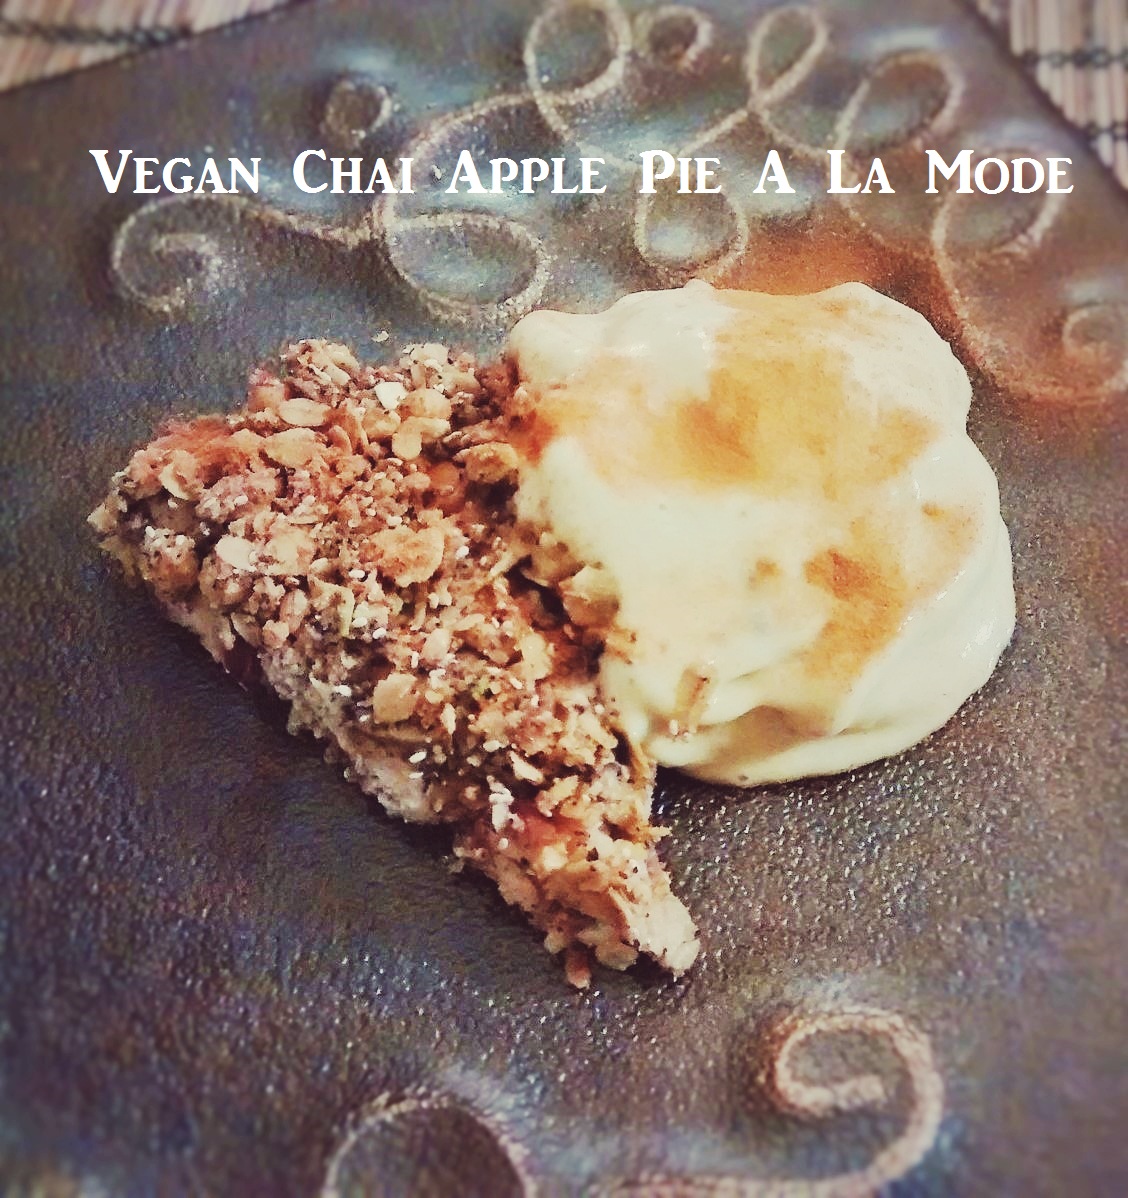 Vegan Pie Recipes: Chai Apple Pie A La Mode